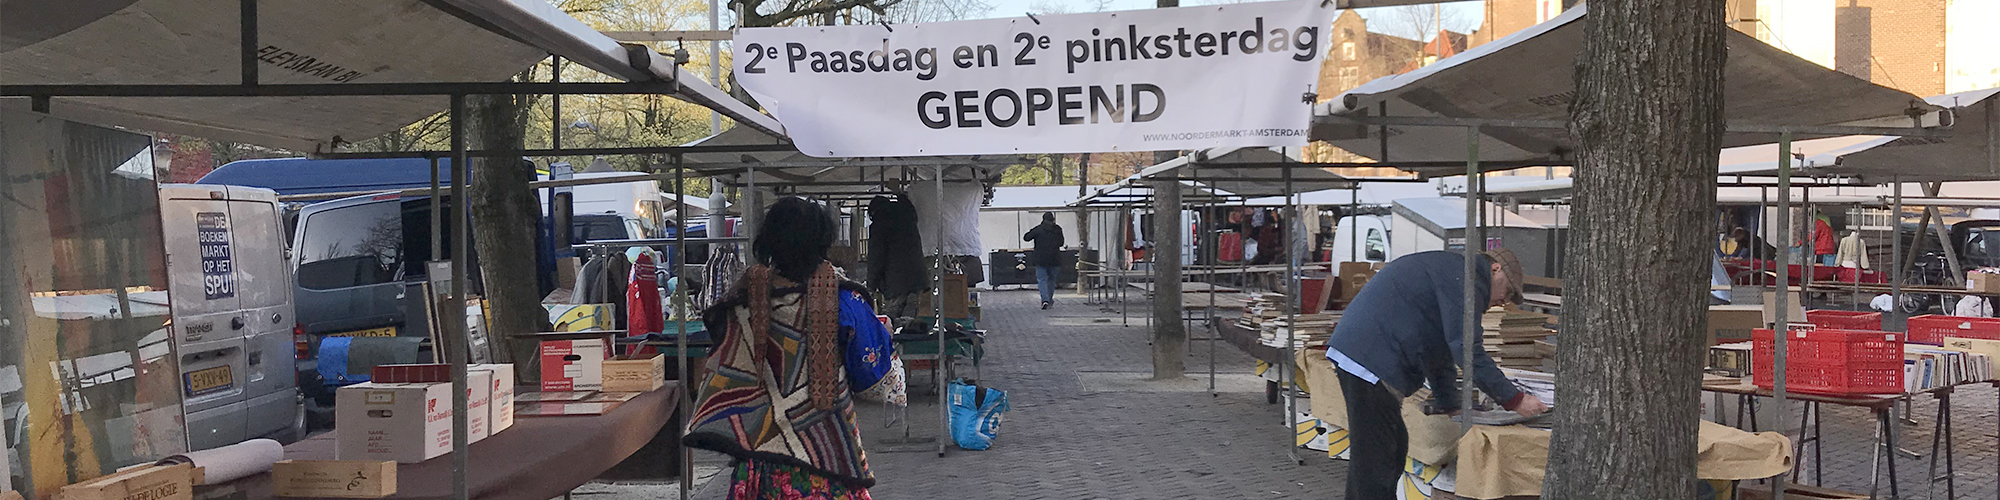 https://www.noordermarkt-amsterdam.nl/uploads/images/fotostroke/Contact-bannerPP-open.jpg